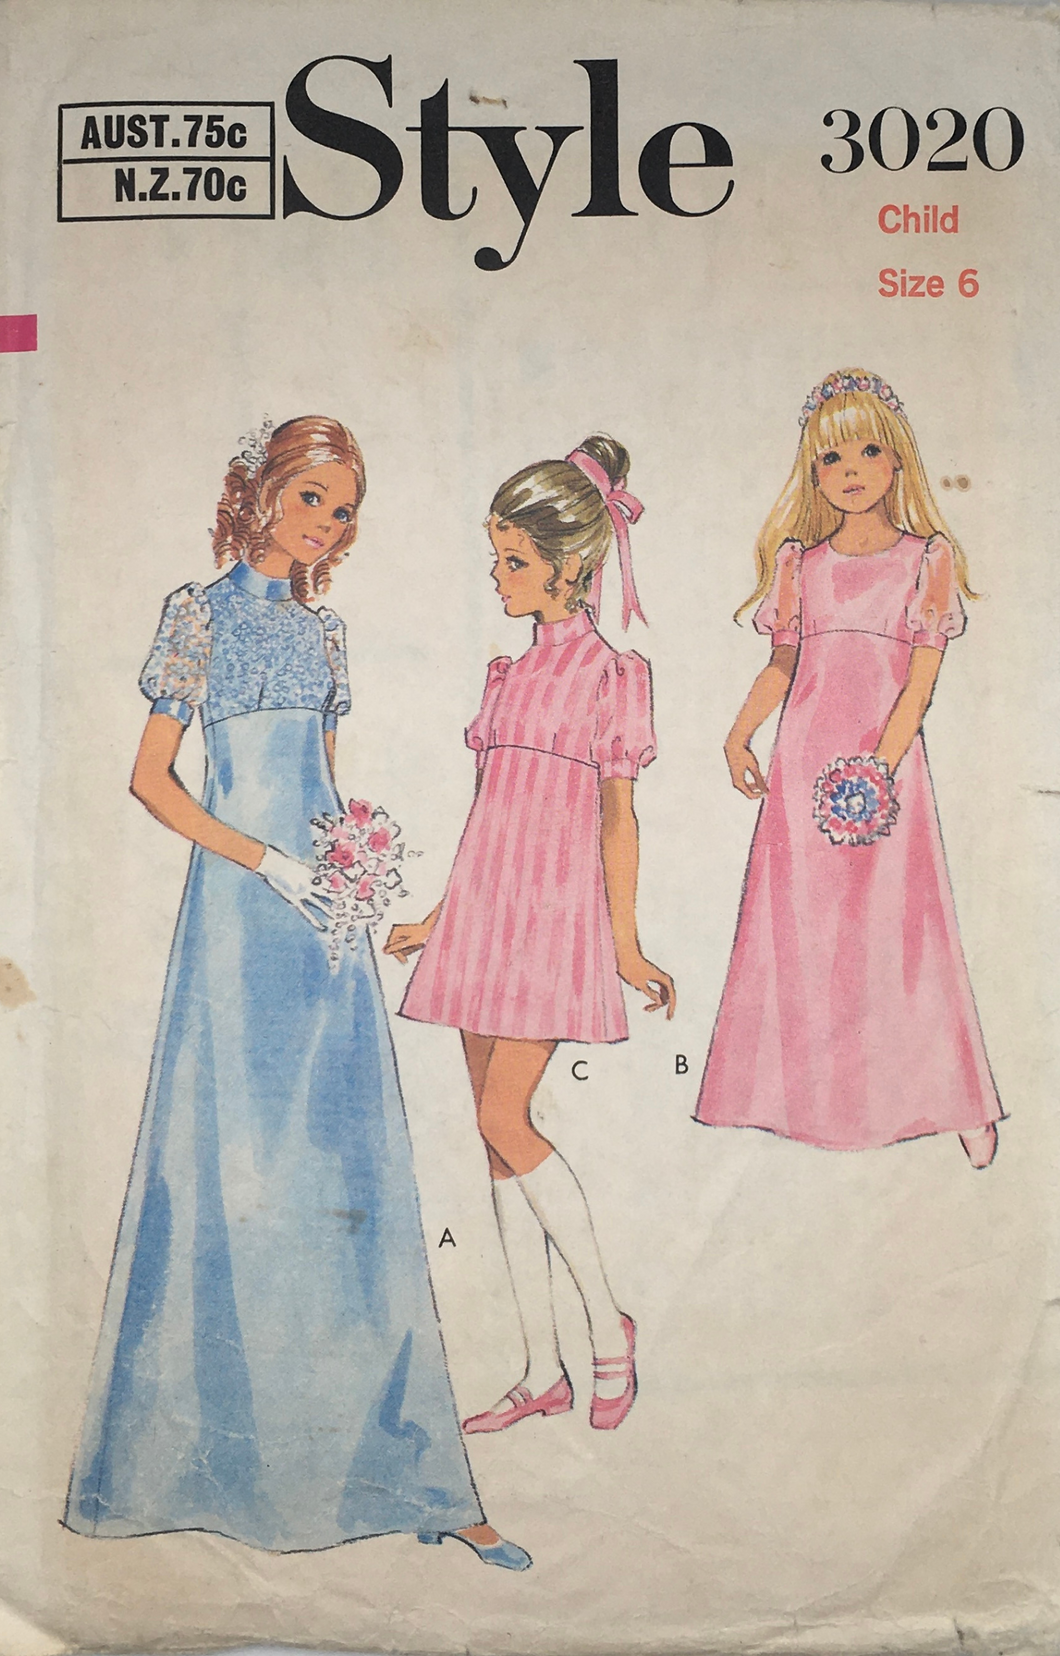 1971 Vintage Sewing Pattern: Style 3020